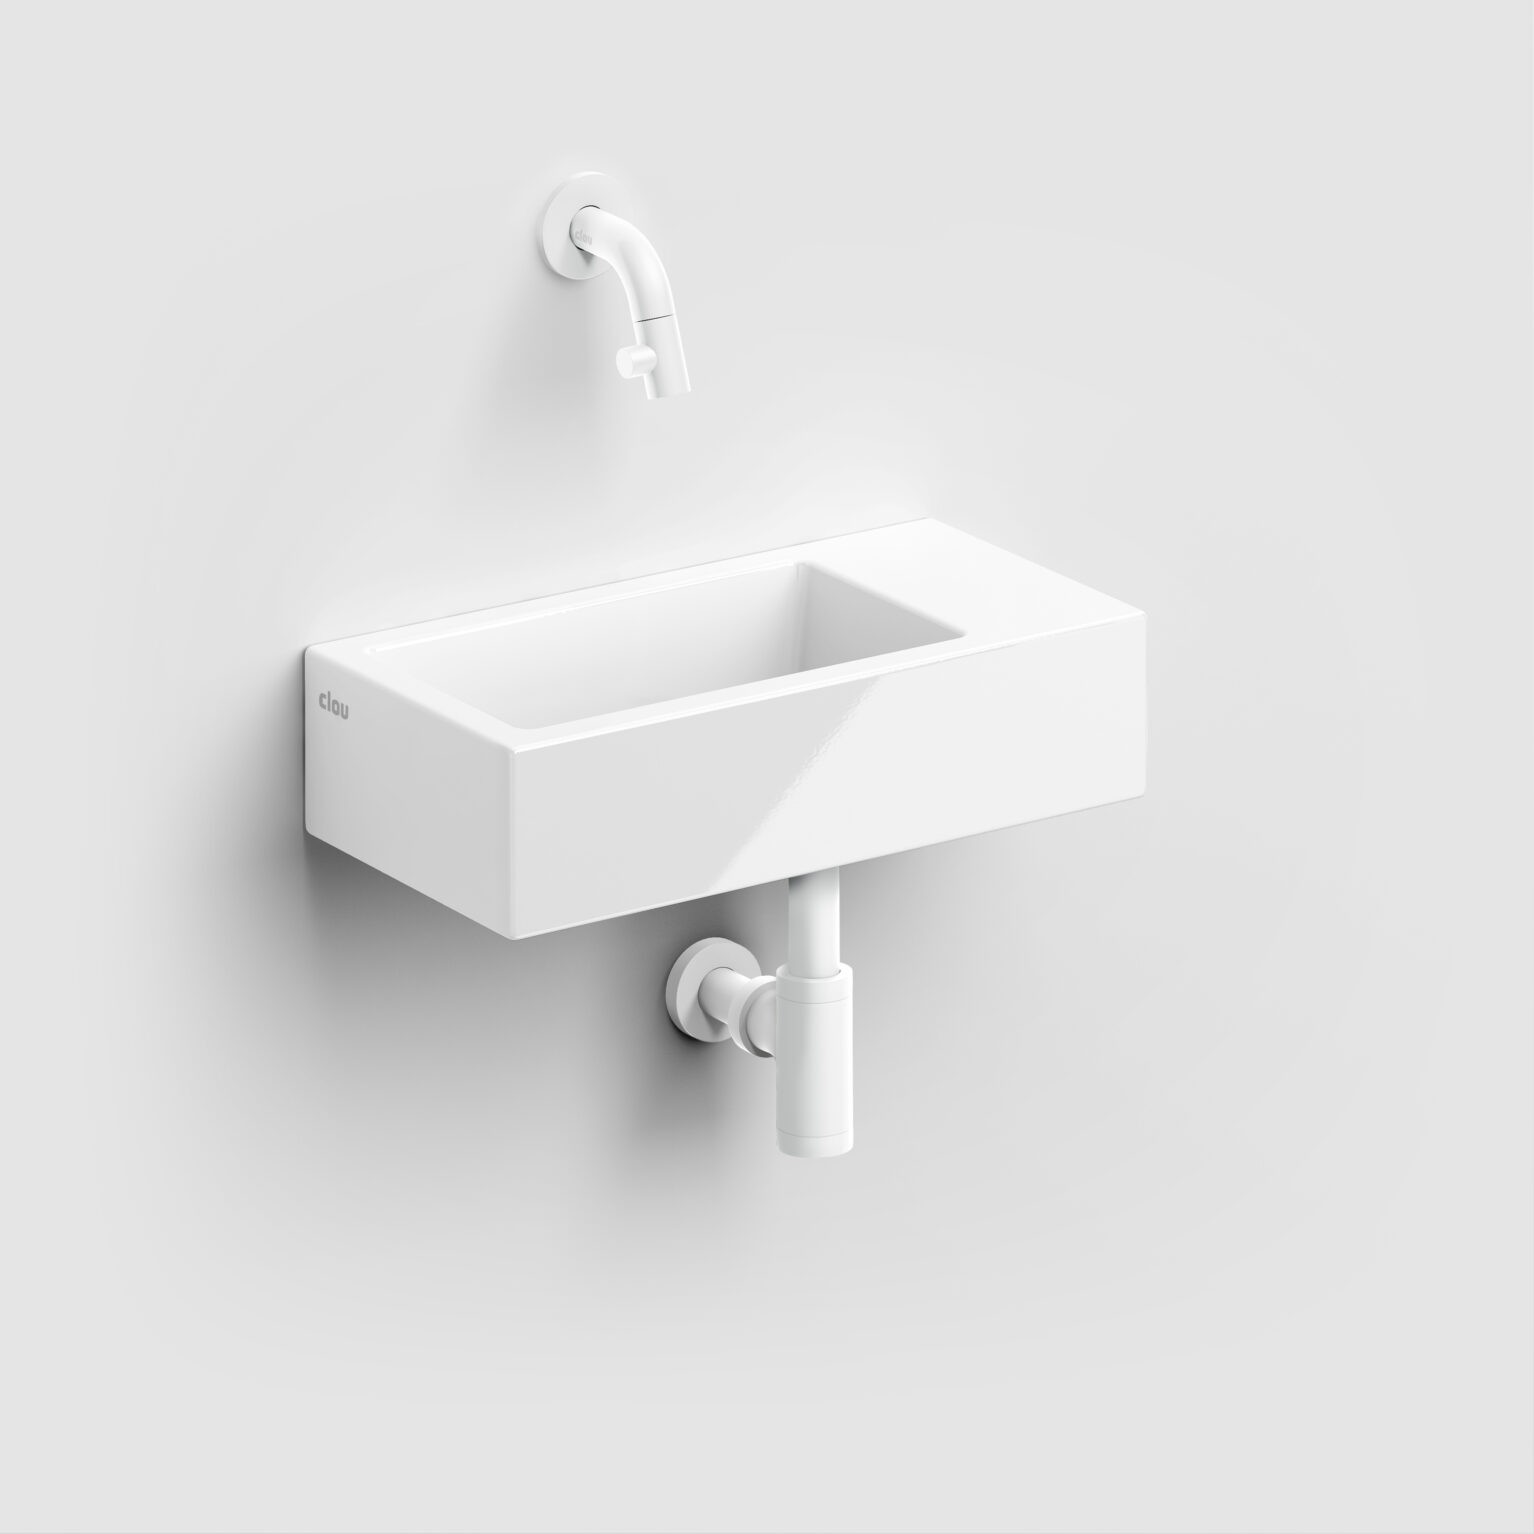 fontein-wastafel-wit-toilet-badkamer-luxe-sanitair-Flush-3-rechts-clou-CL0303031-keramiek-36cm-wandkraan-Sp-wit-sifon-kaldur-kraan